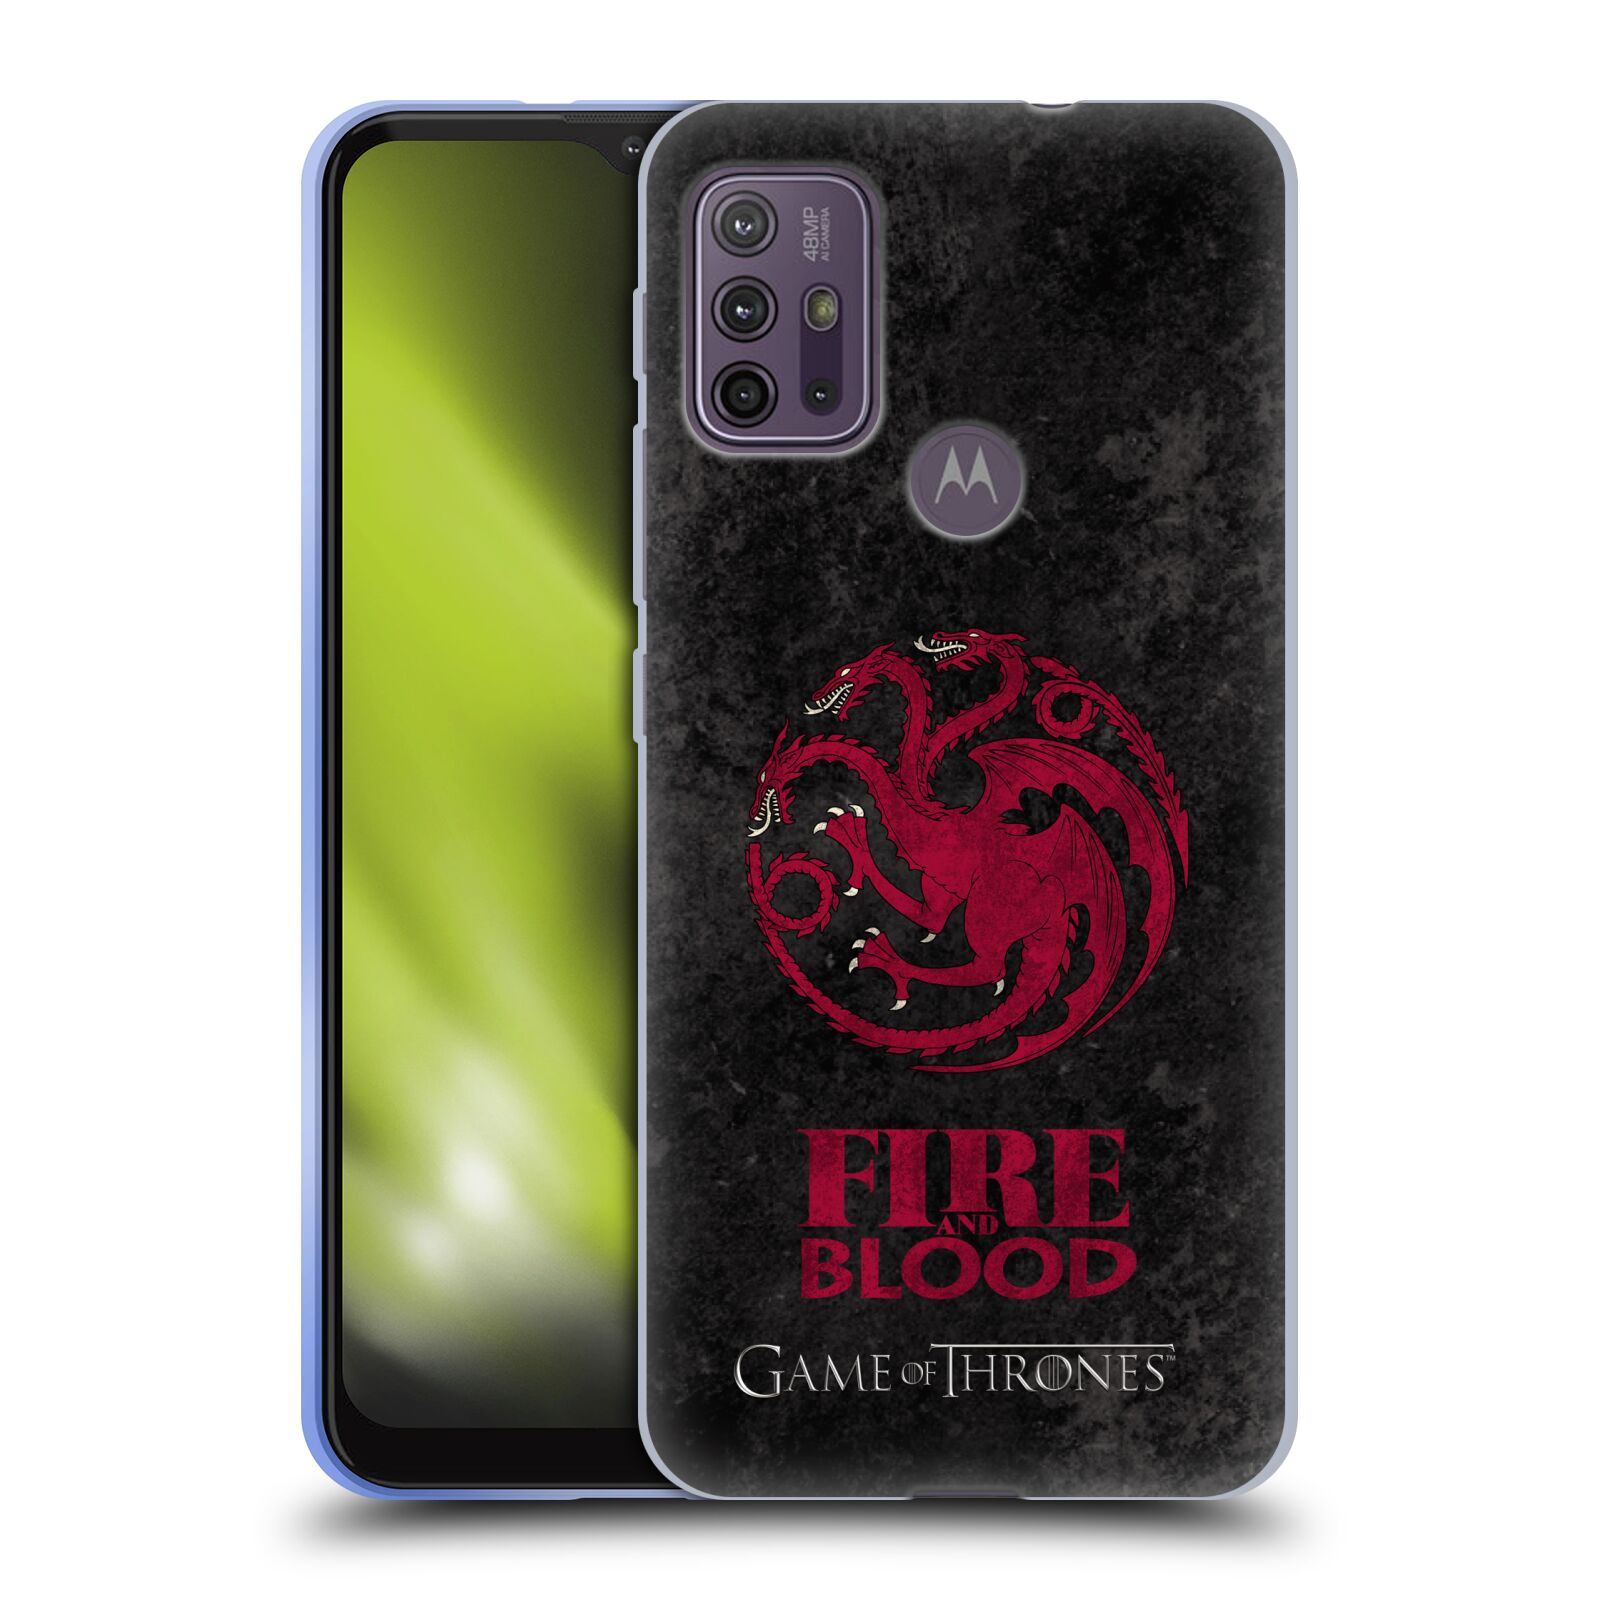 Silikonové pouzdro na mobil Motorola Moto G10 / G30 - Head Case - Hra o trůny - Sigils Targaryen - Fire and Blood